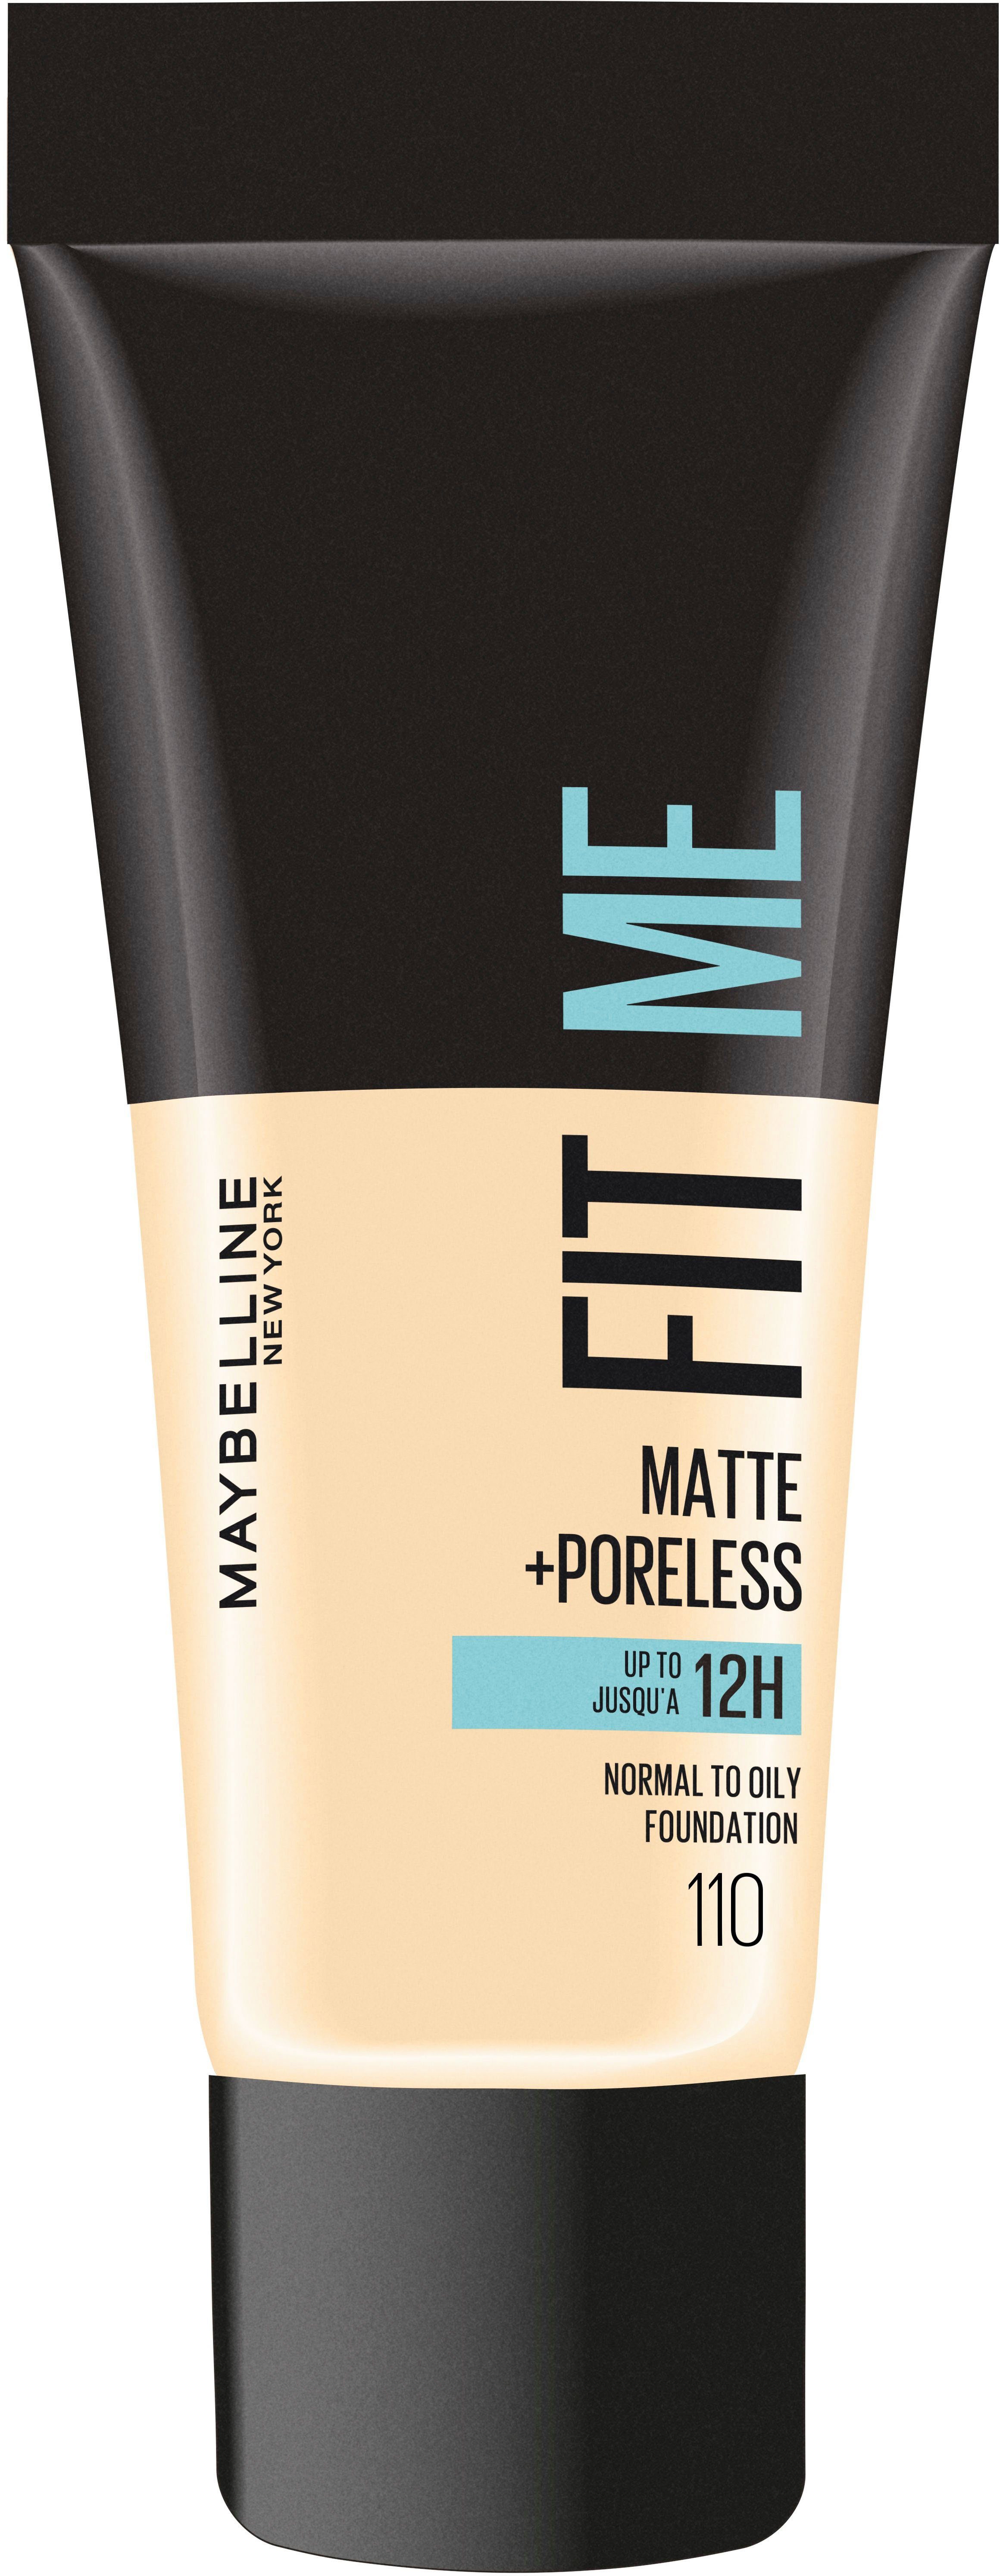 MAYBELLINE NEW YORK Foundation Poreless Fit York New Matte Maybelline + Make-Up Me